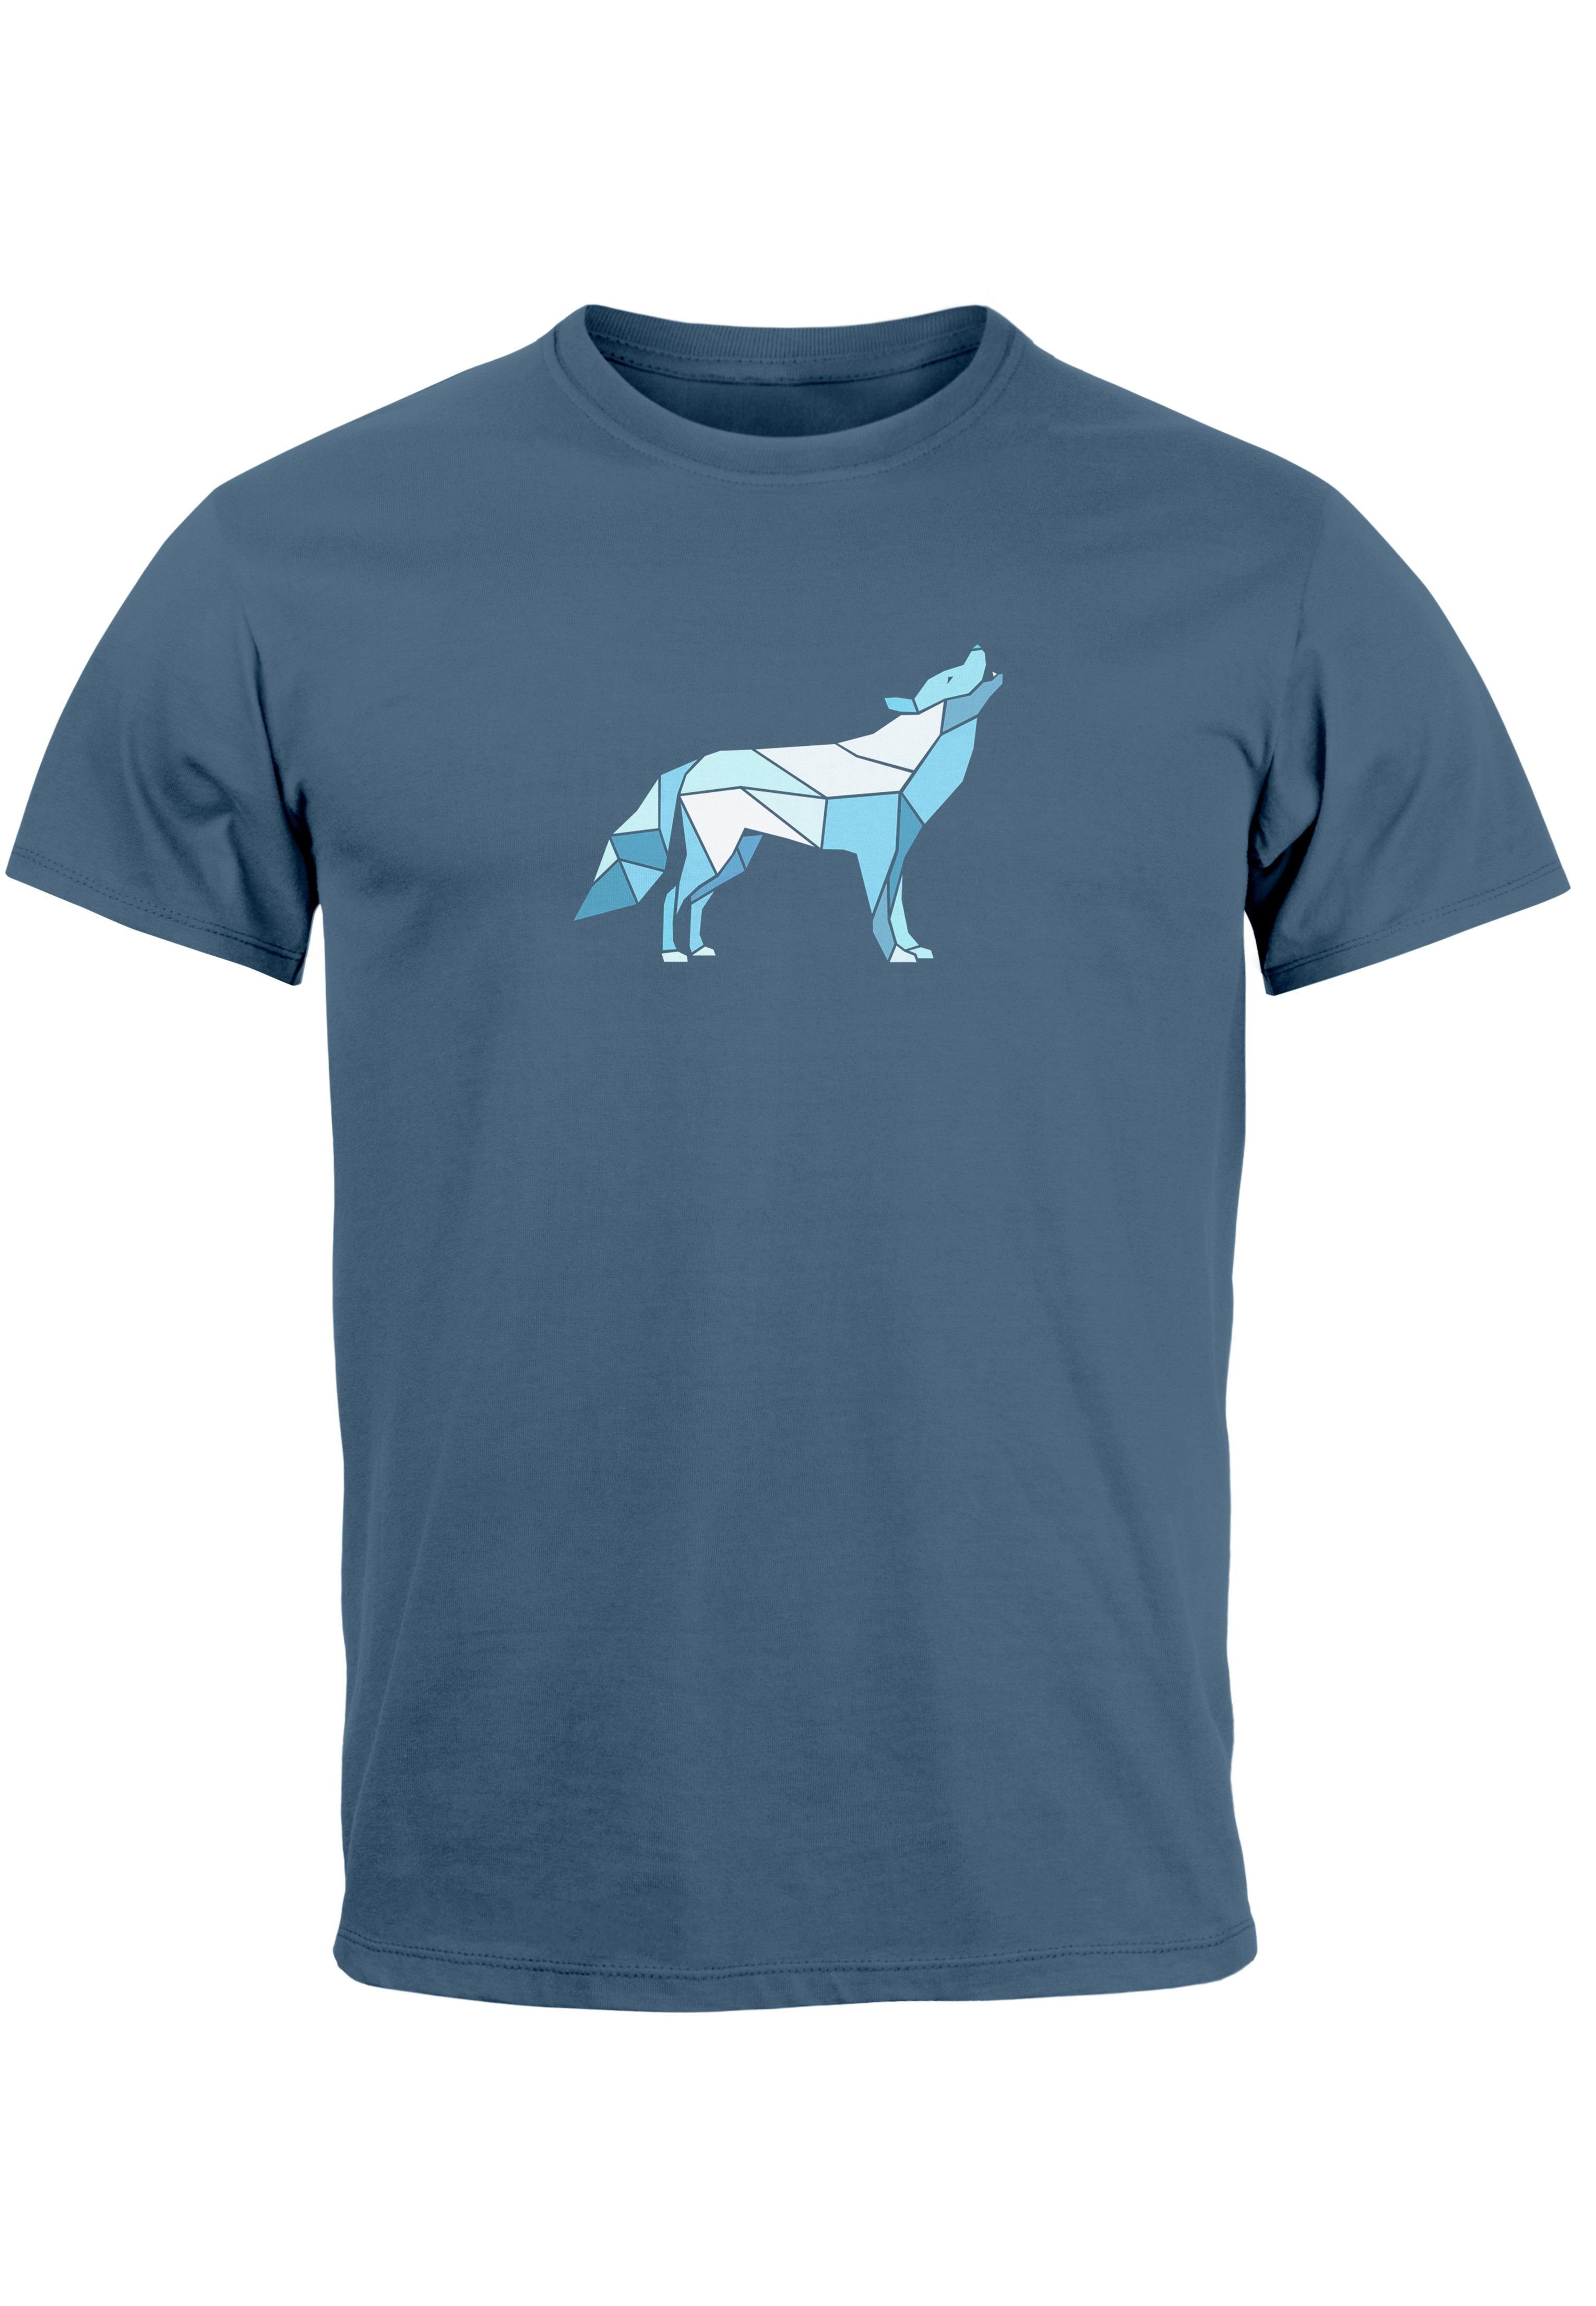 Bedruckt Polygon T-Shirt Tiermotiv denim Herren blue Grafik Print Neverless Wolf Print-Shirt mit Fashion Outdoor